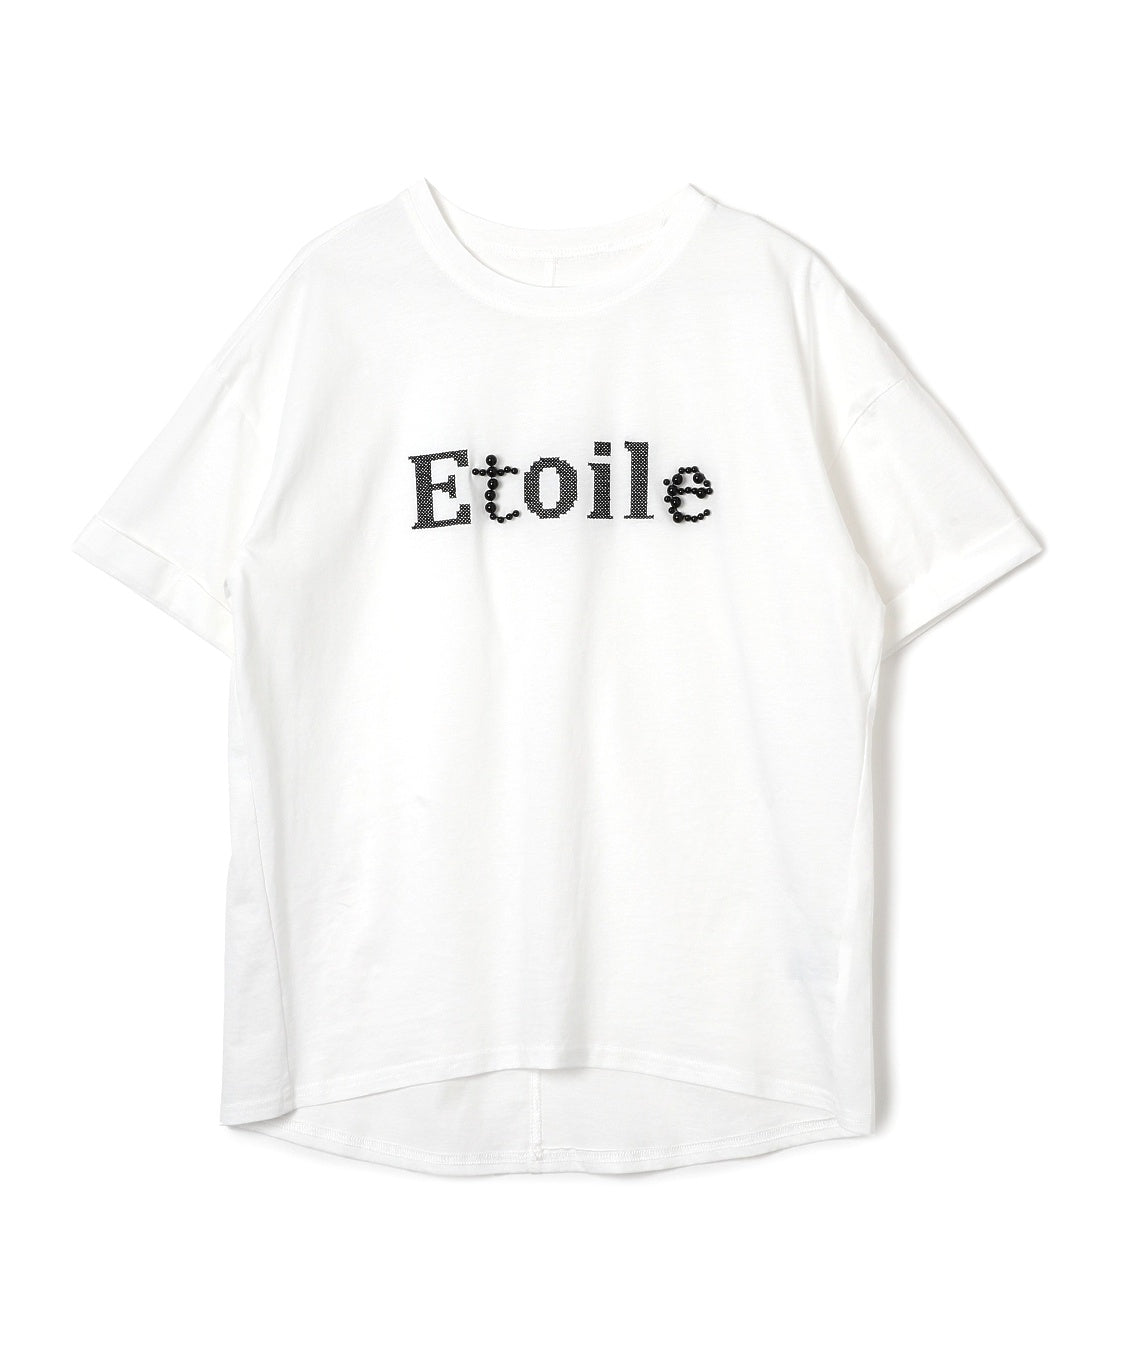 EtoileパールTシャツ  DAYTIME(デイタイム)